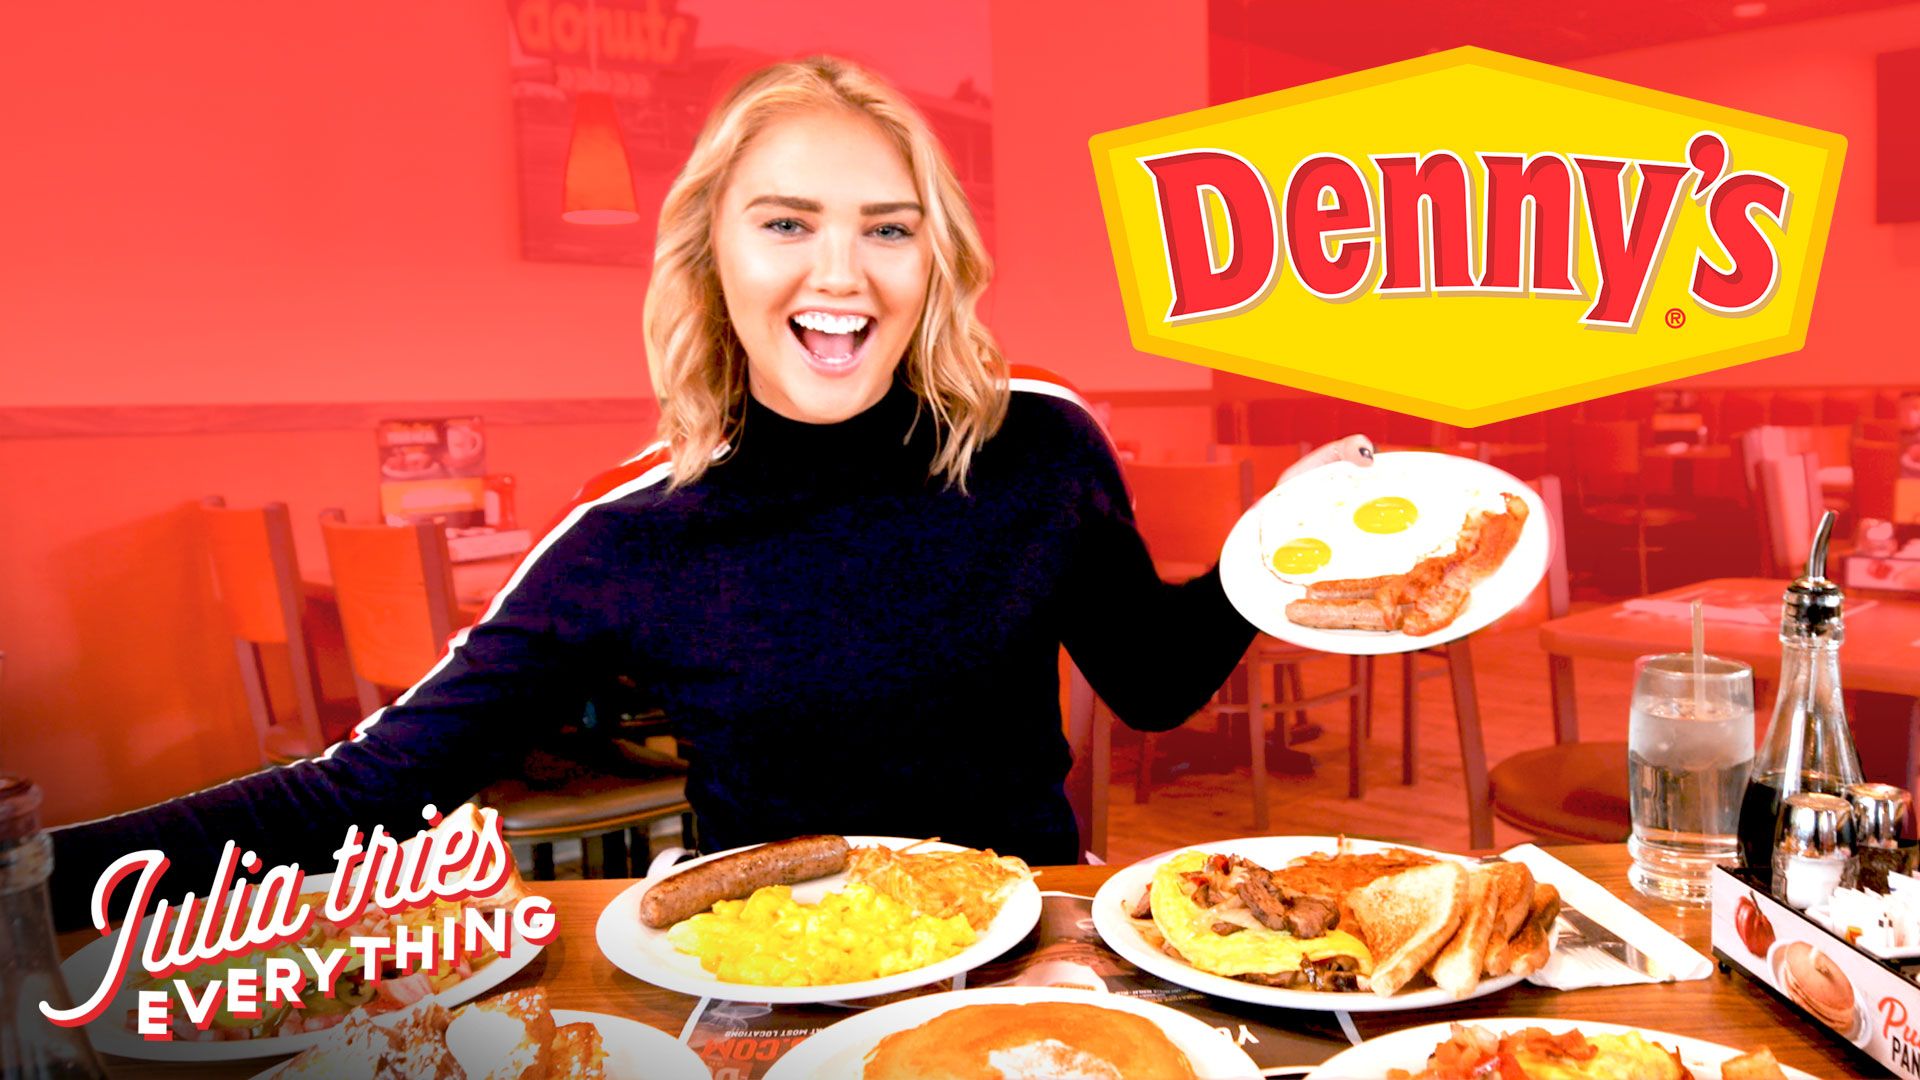 Breakfast at DENNY'S, Family vlog